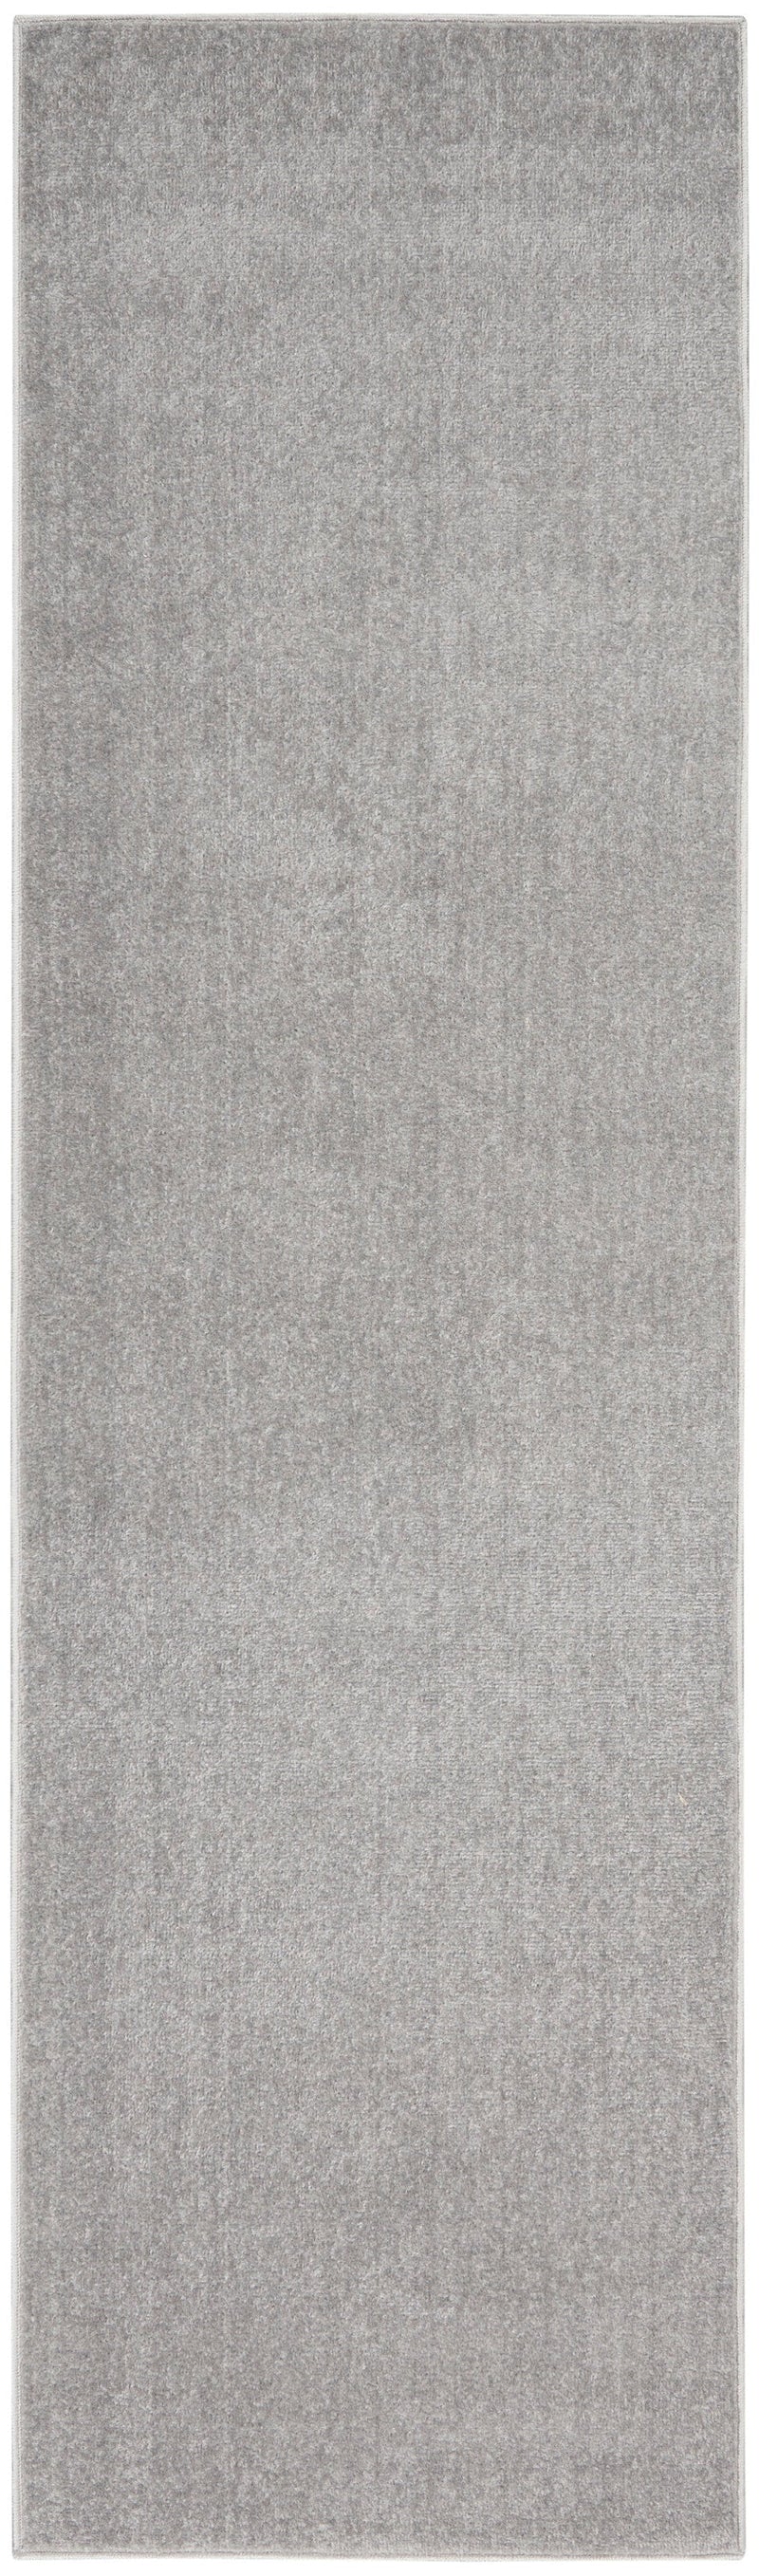 media image for nourison essentials silver grey rug by nourison 99446062369 redo 4 283